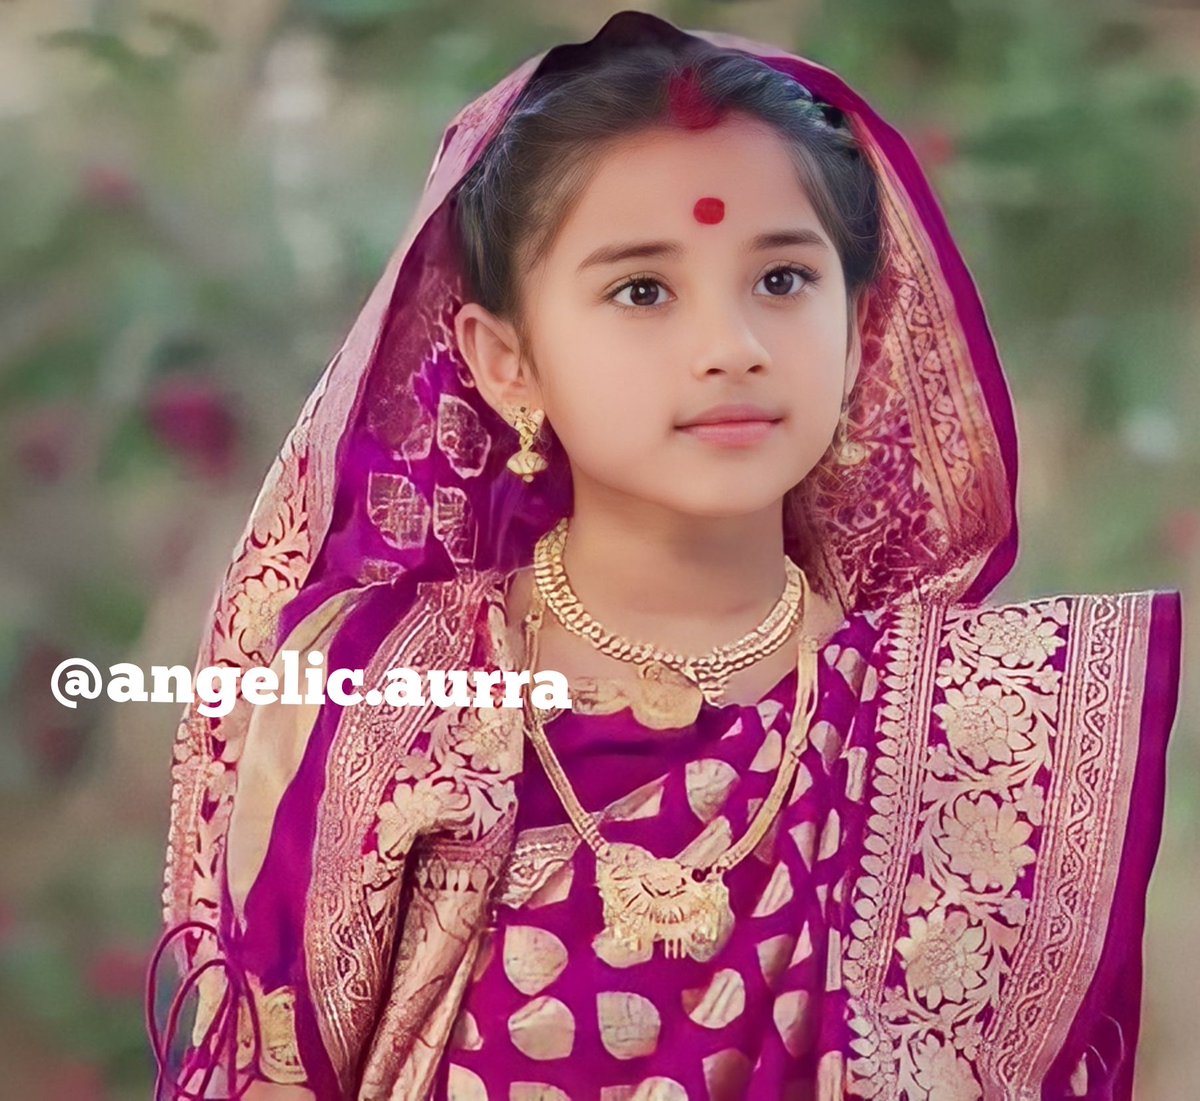 Little princess 😍😘😘
#AurraBhatnagarBadoni #BarristerBabu #Bondita #durga 
#durgaaurcharu